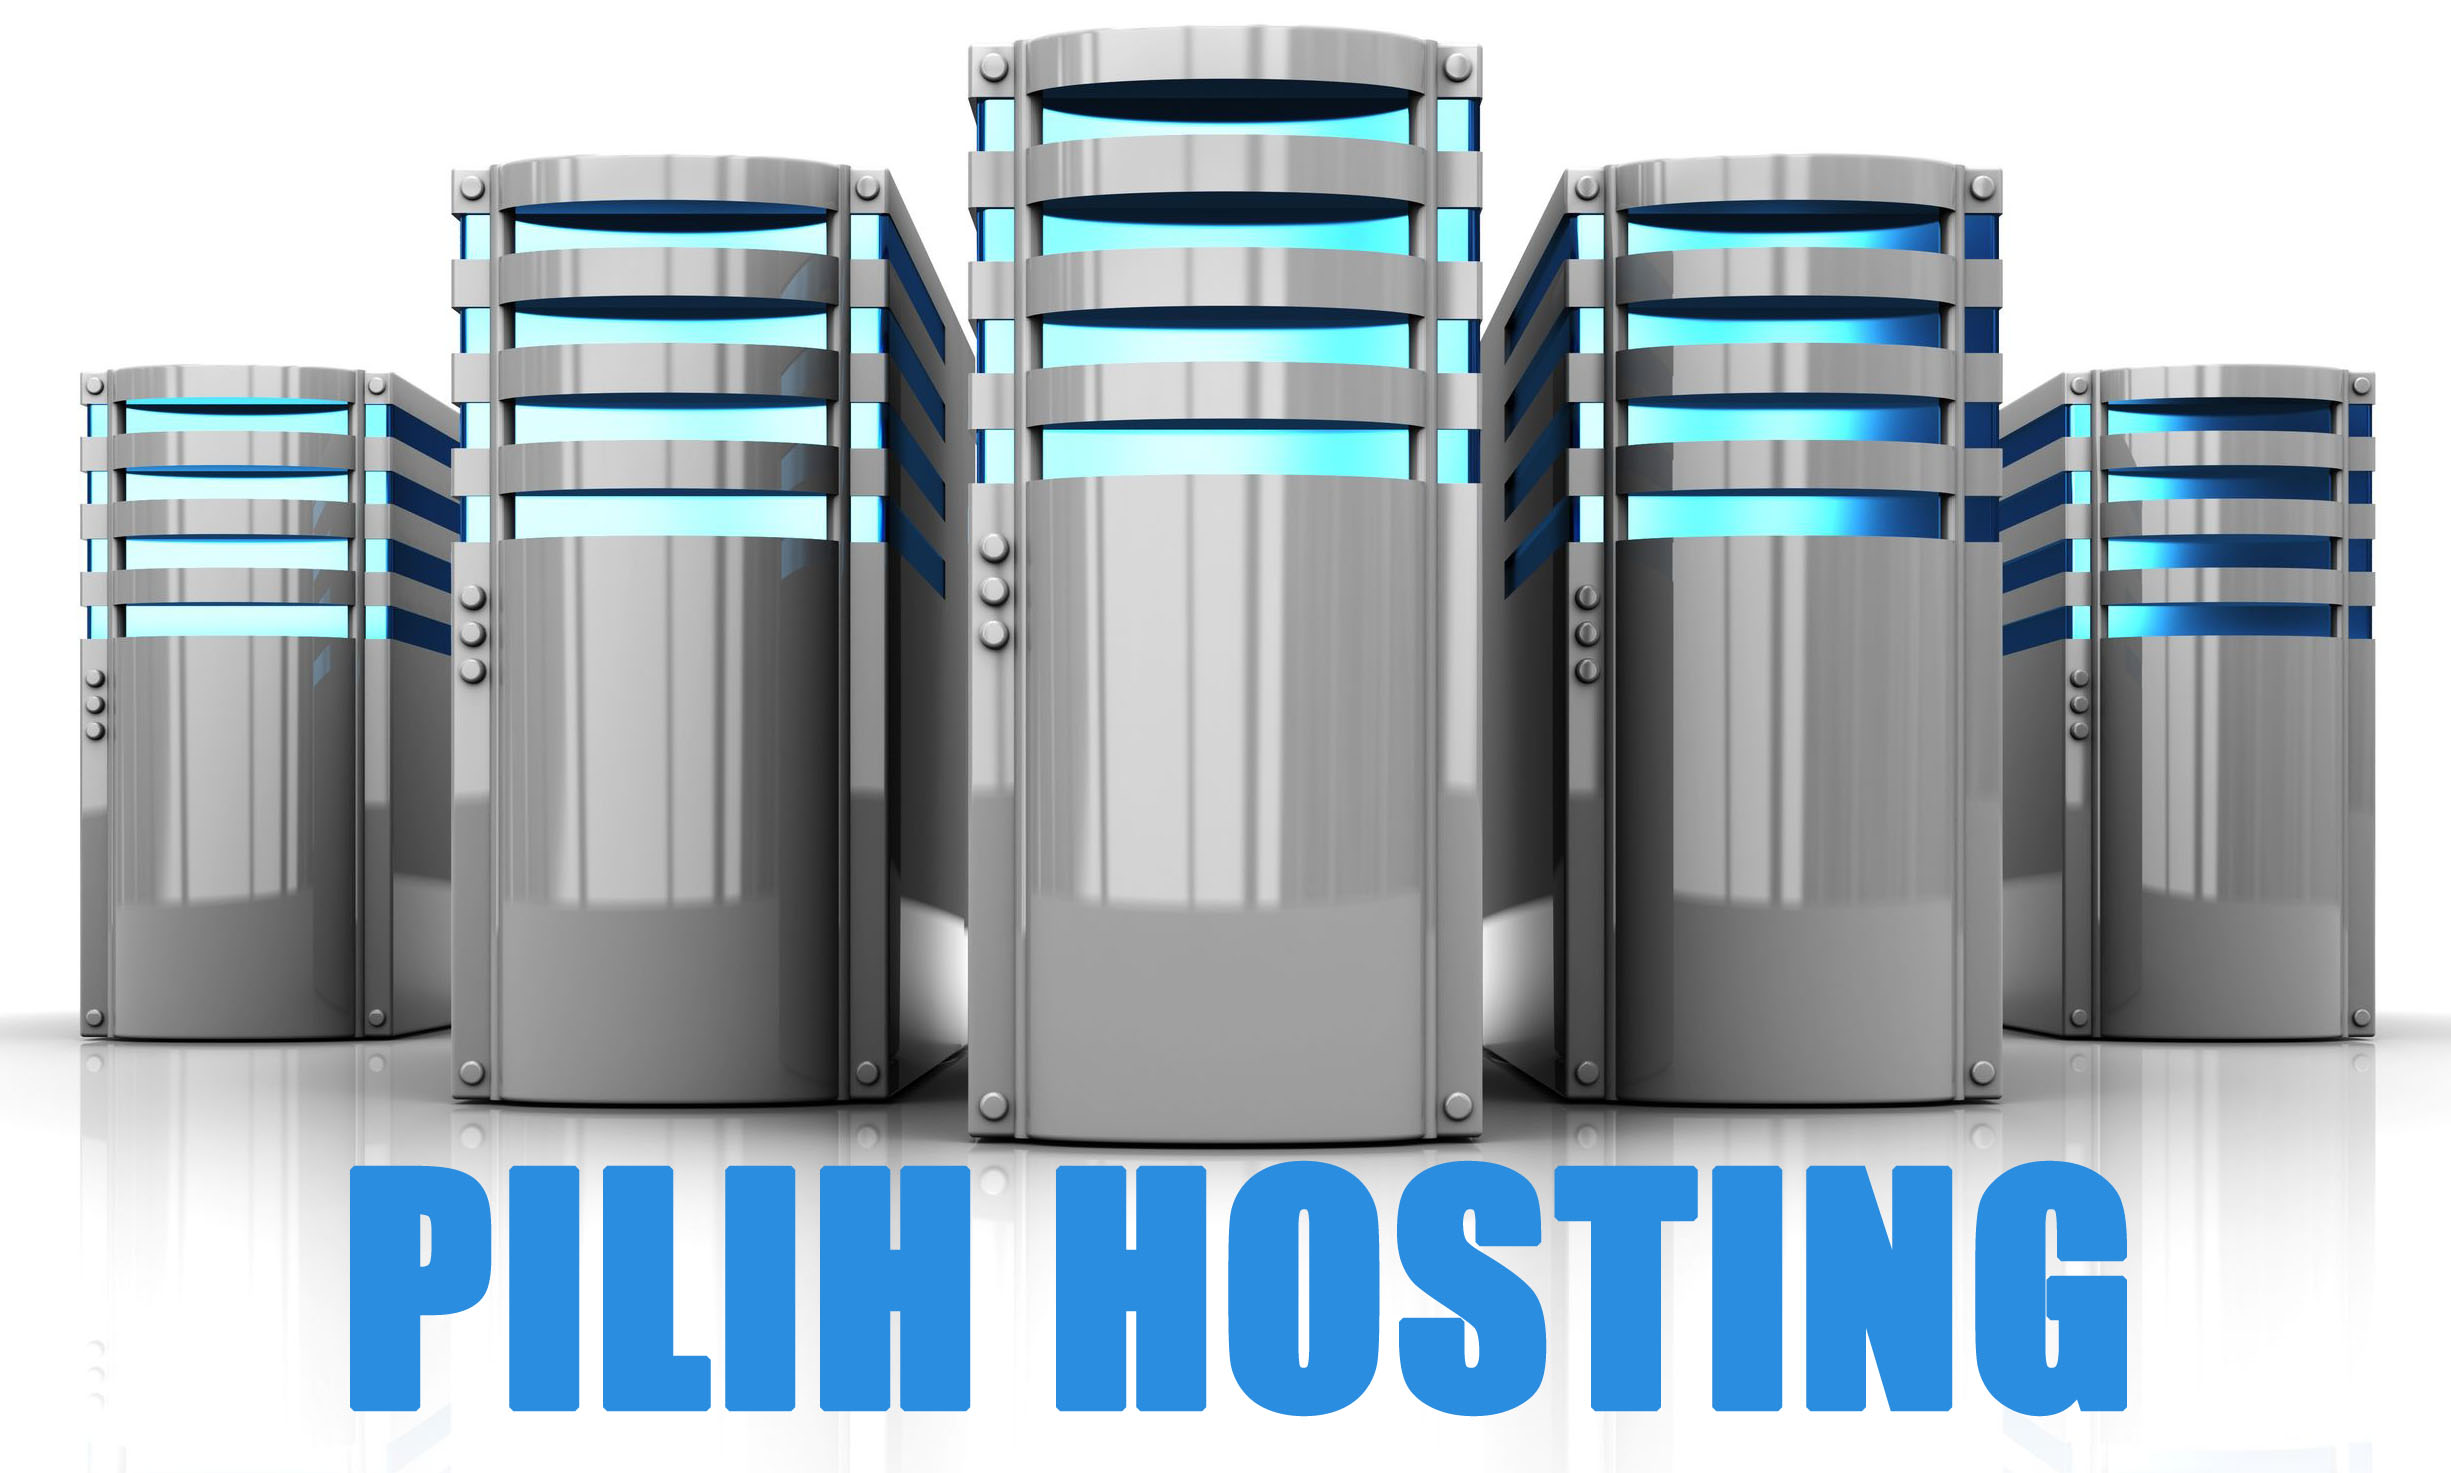 Beli paket hosting